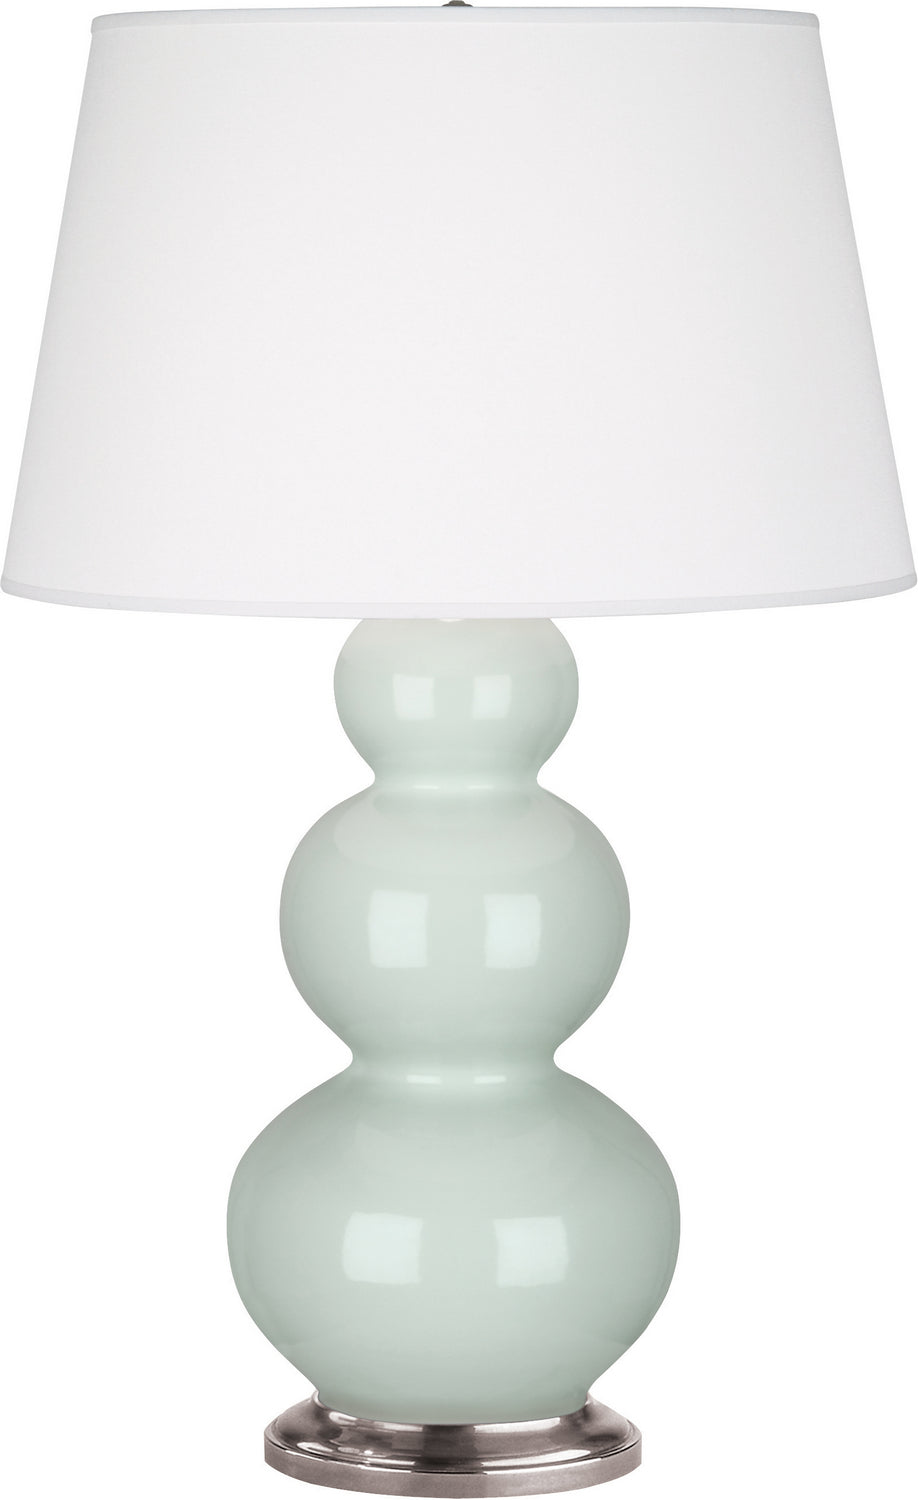 Robert Abbey - One Light Table Lamp - Triple Gourd - Celadon Glazed Ceramic w/Antique Silver- Union Lighting Luminaires Decor